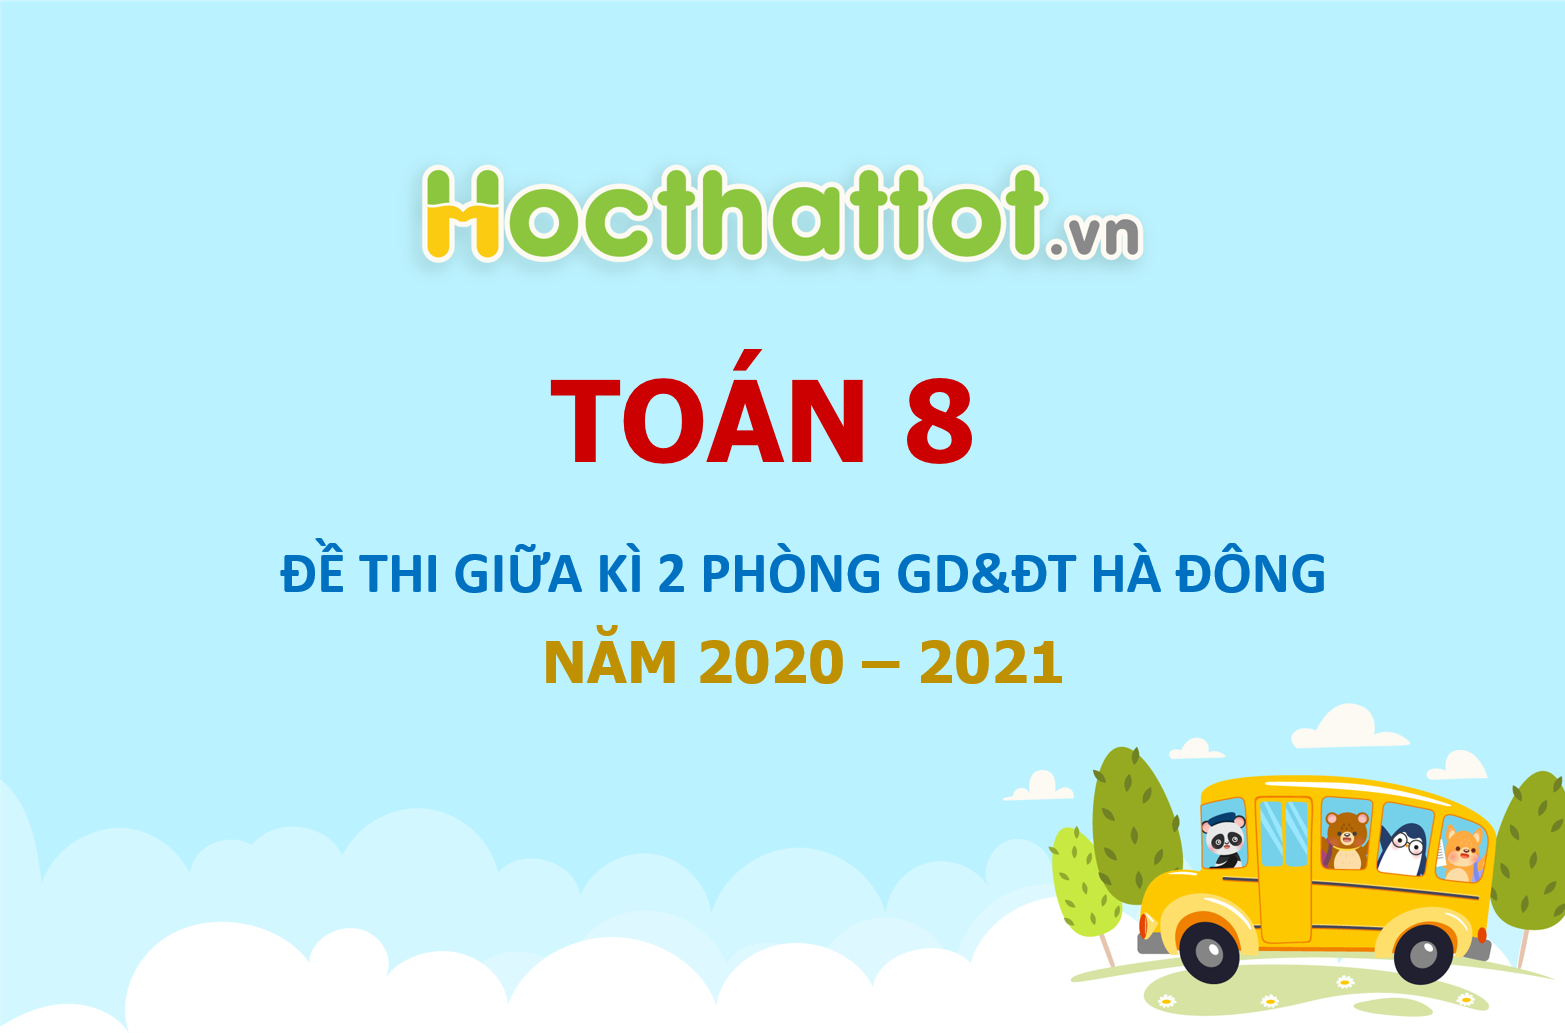 de-thi-giua-ki-2-toan-8-nam-2020-2021-phong-gddt-ha-dong-ha-noi